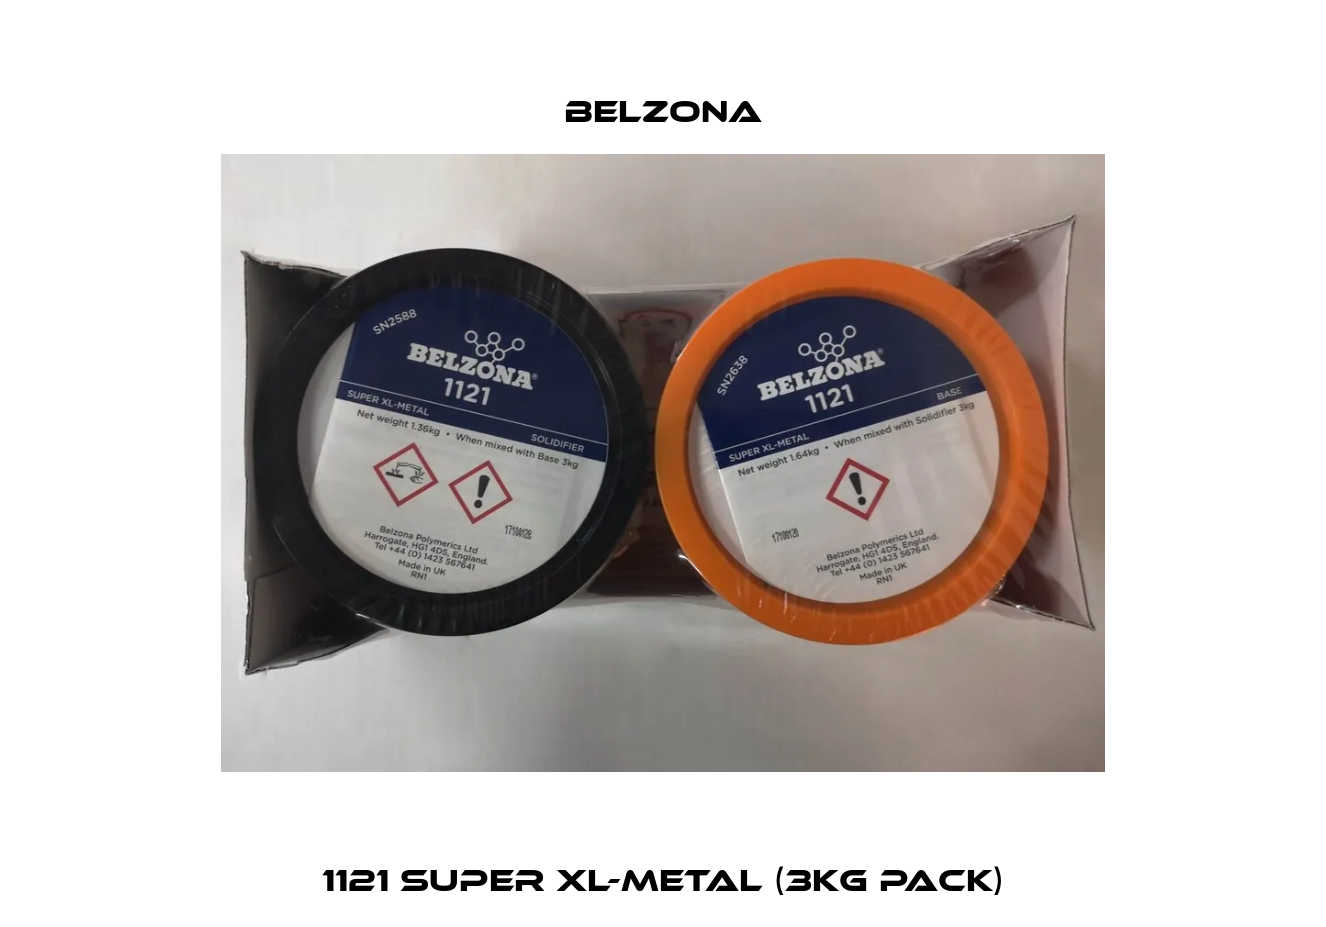 1121 Super XL-Metal (3kg pack) Belzona